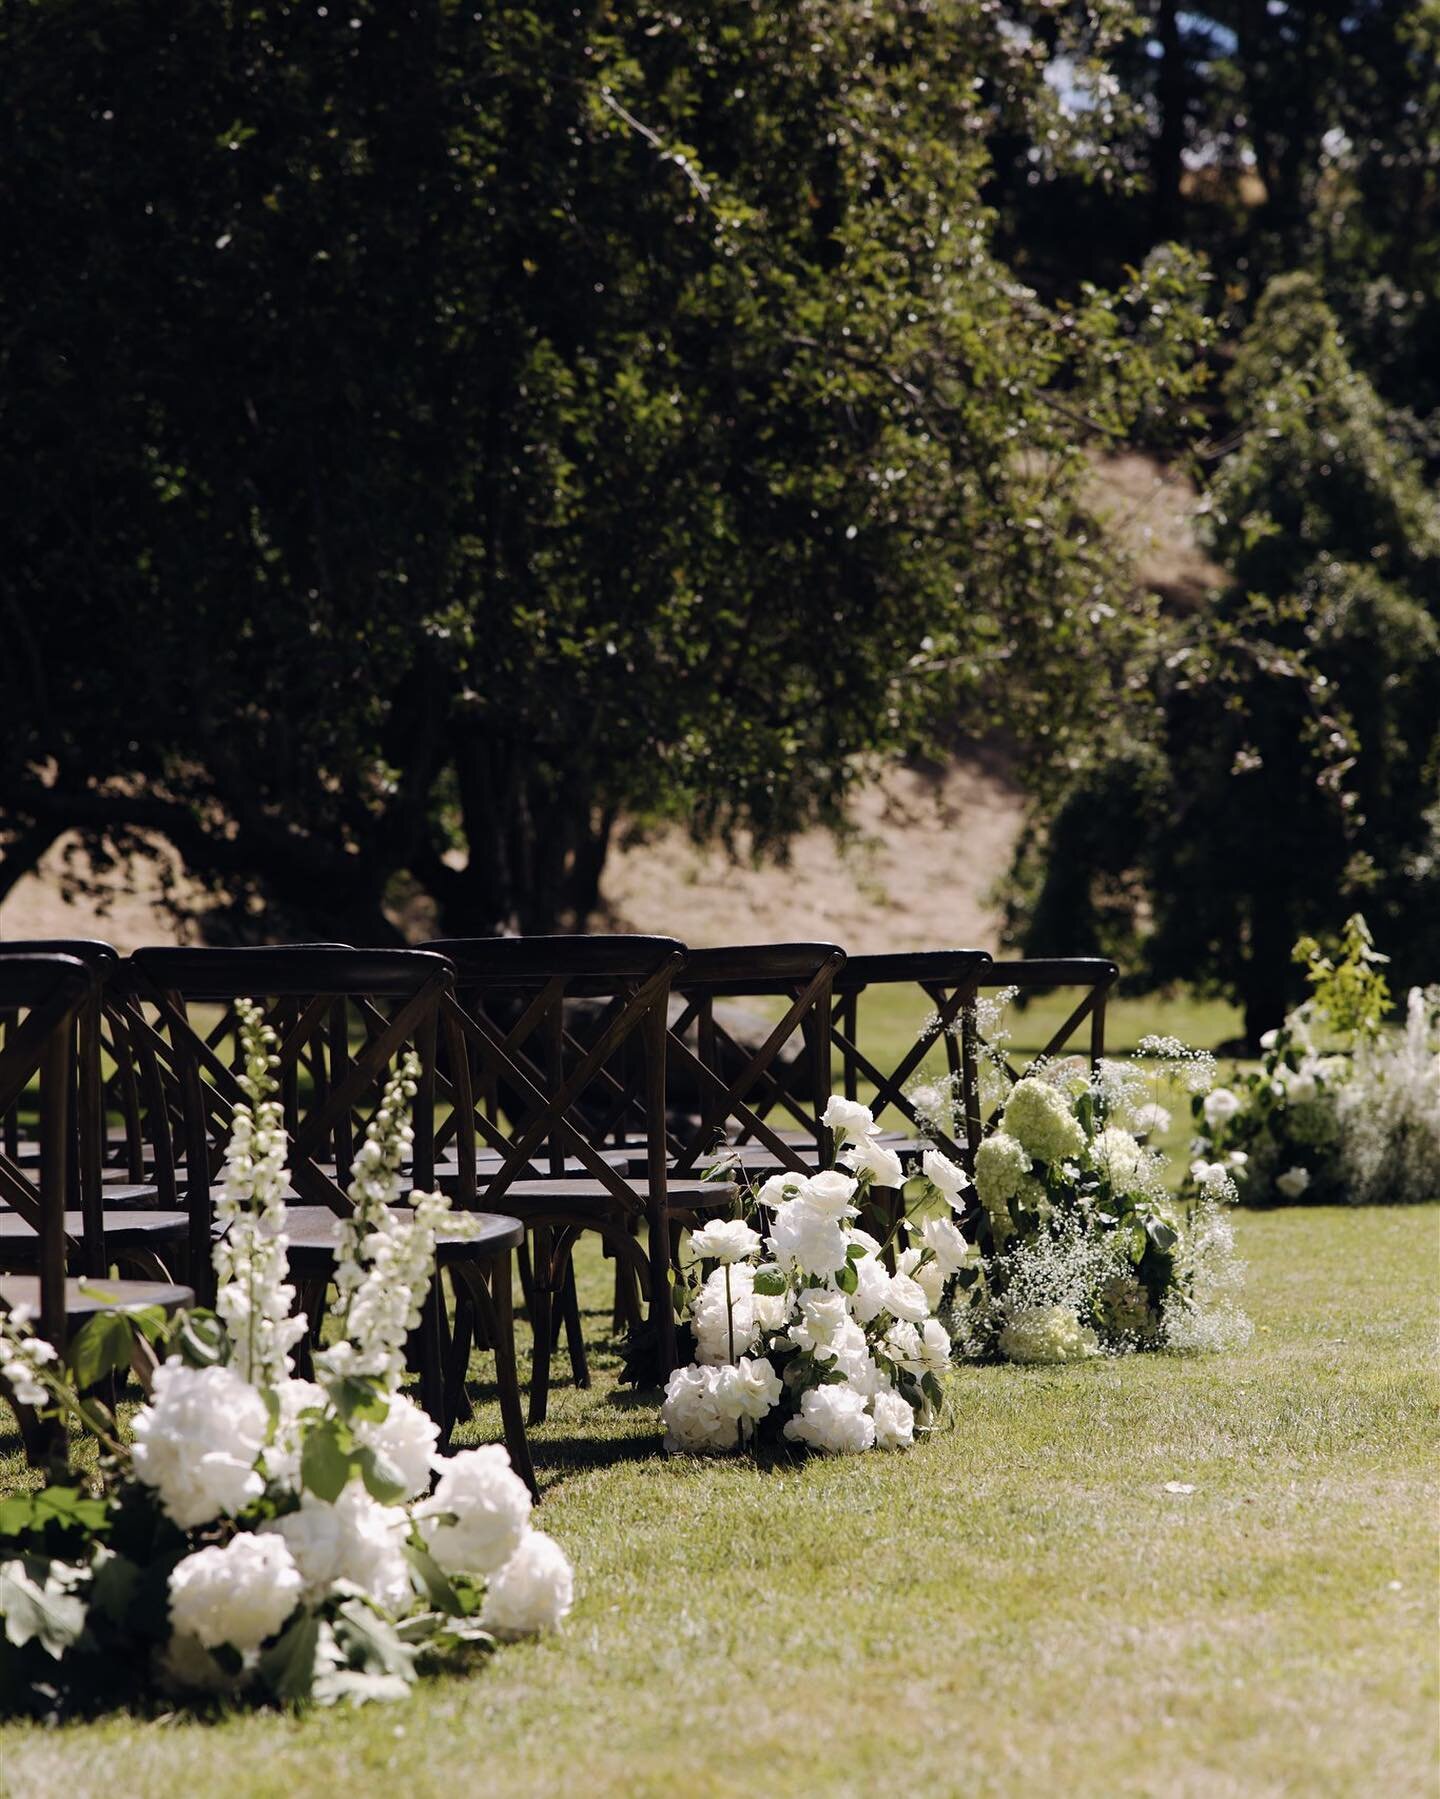 Beautiful black tie garden weddings.. 🖤🍃

Imagery @haute.weddings 
Florals @littlebotanica__